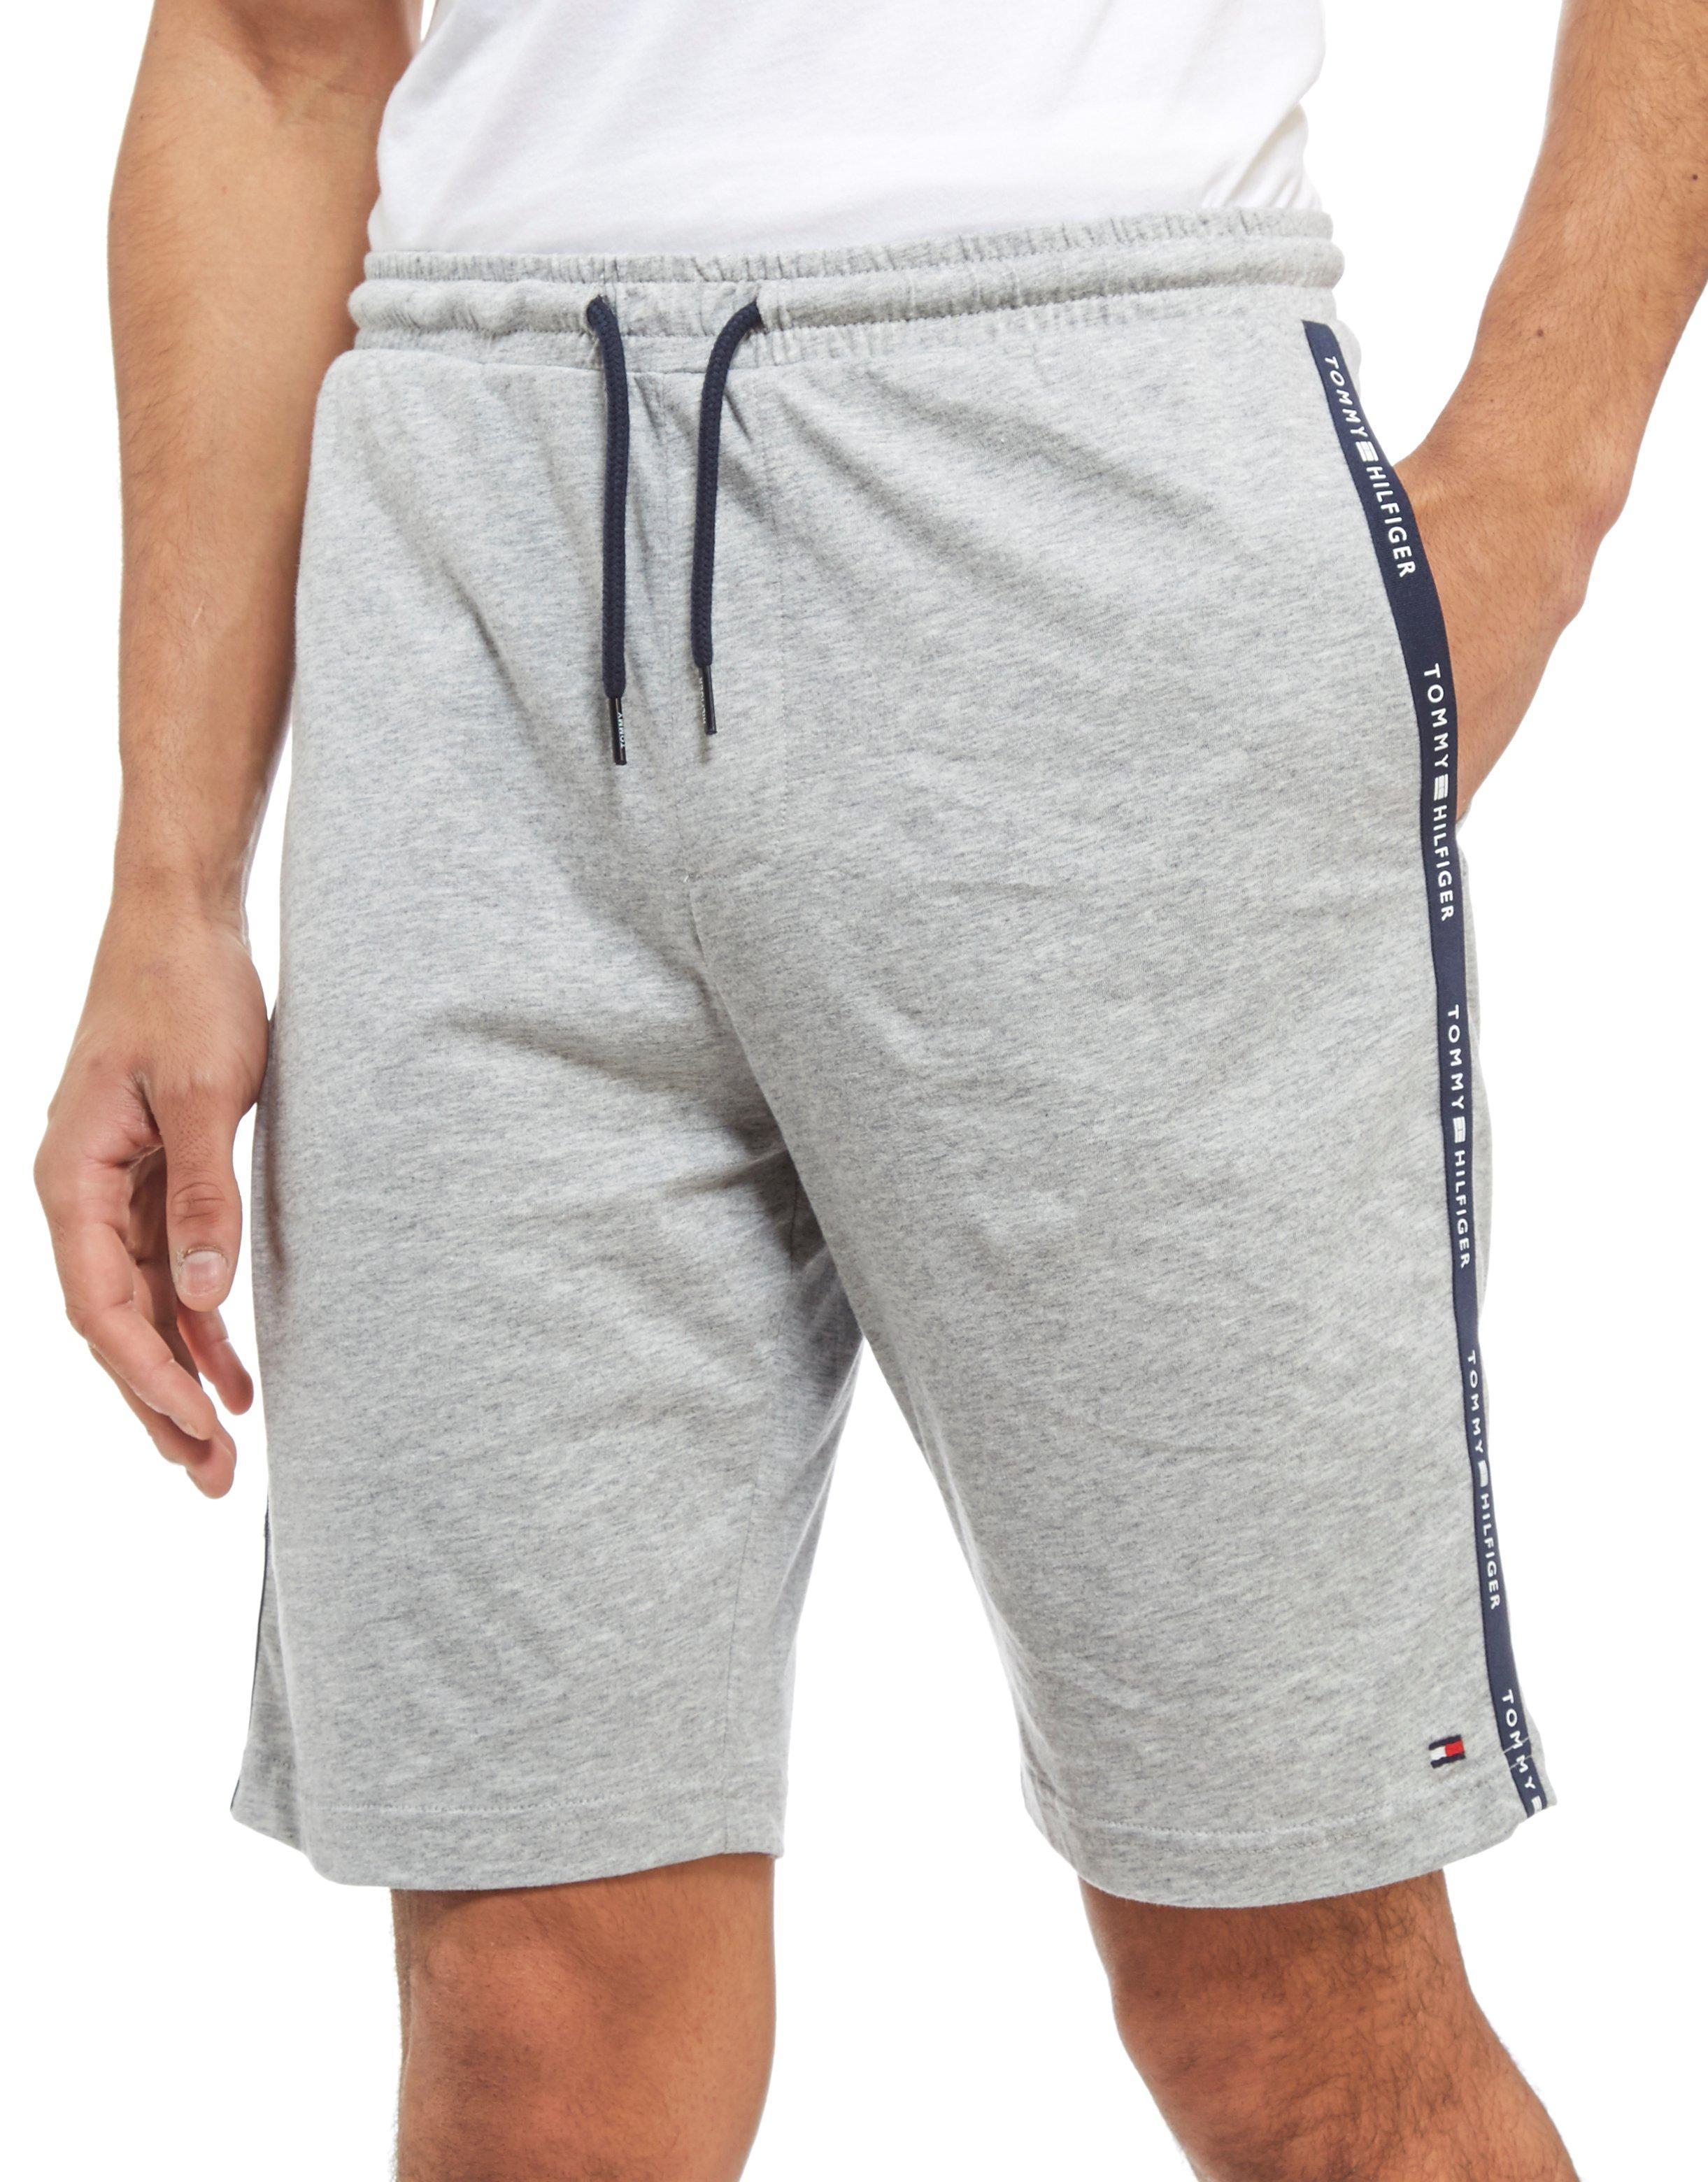 tommy hilfiger shorts grey cheap online